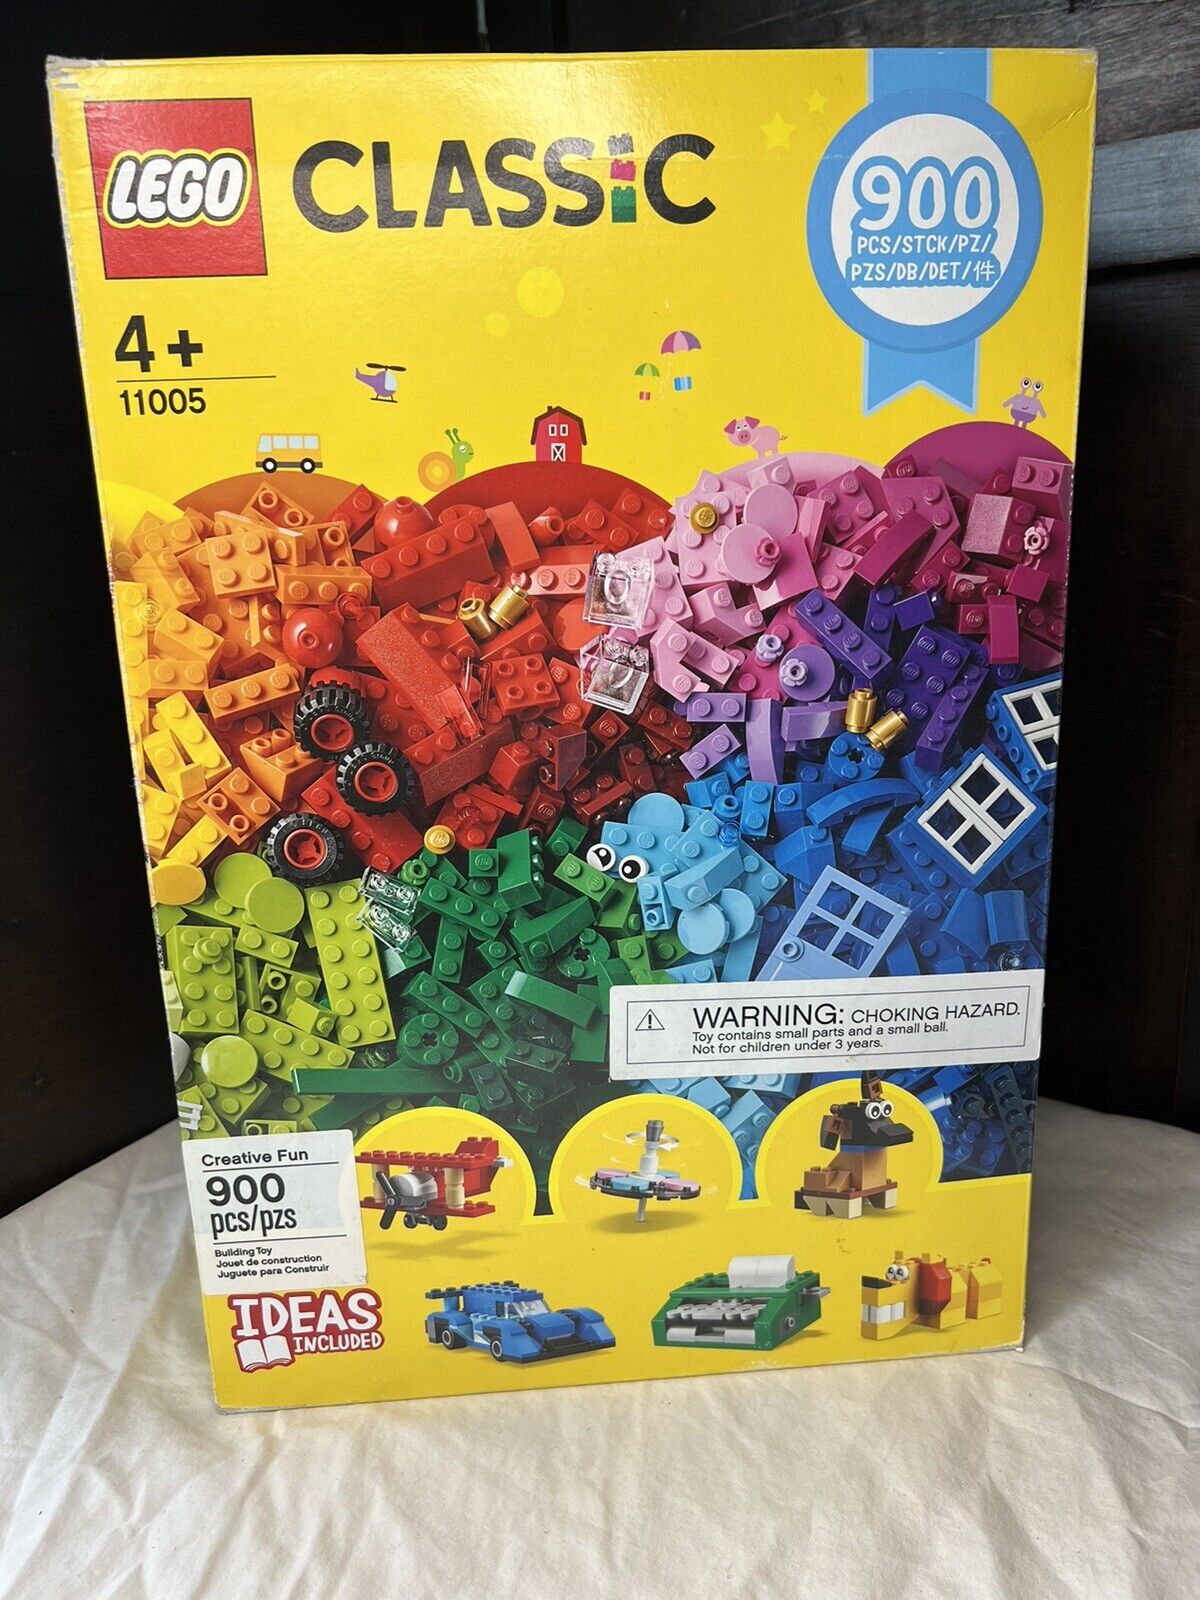 Lego Classic: Creative Fun Building Toys w/900 Pieces (11005) SEALED